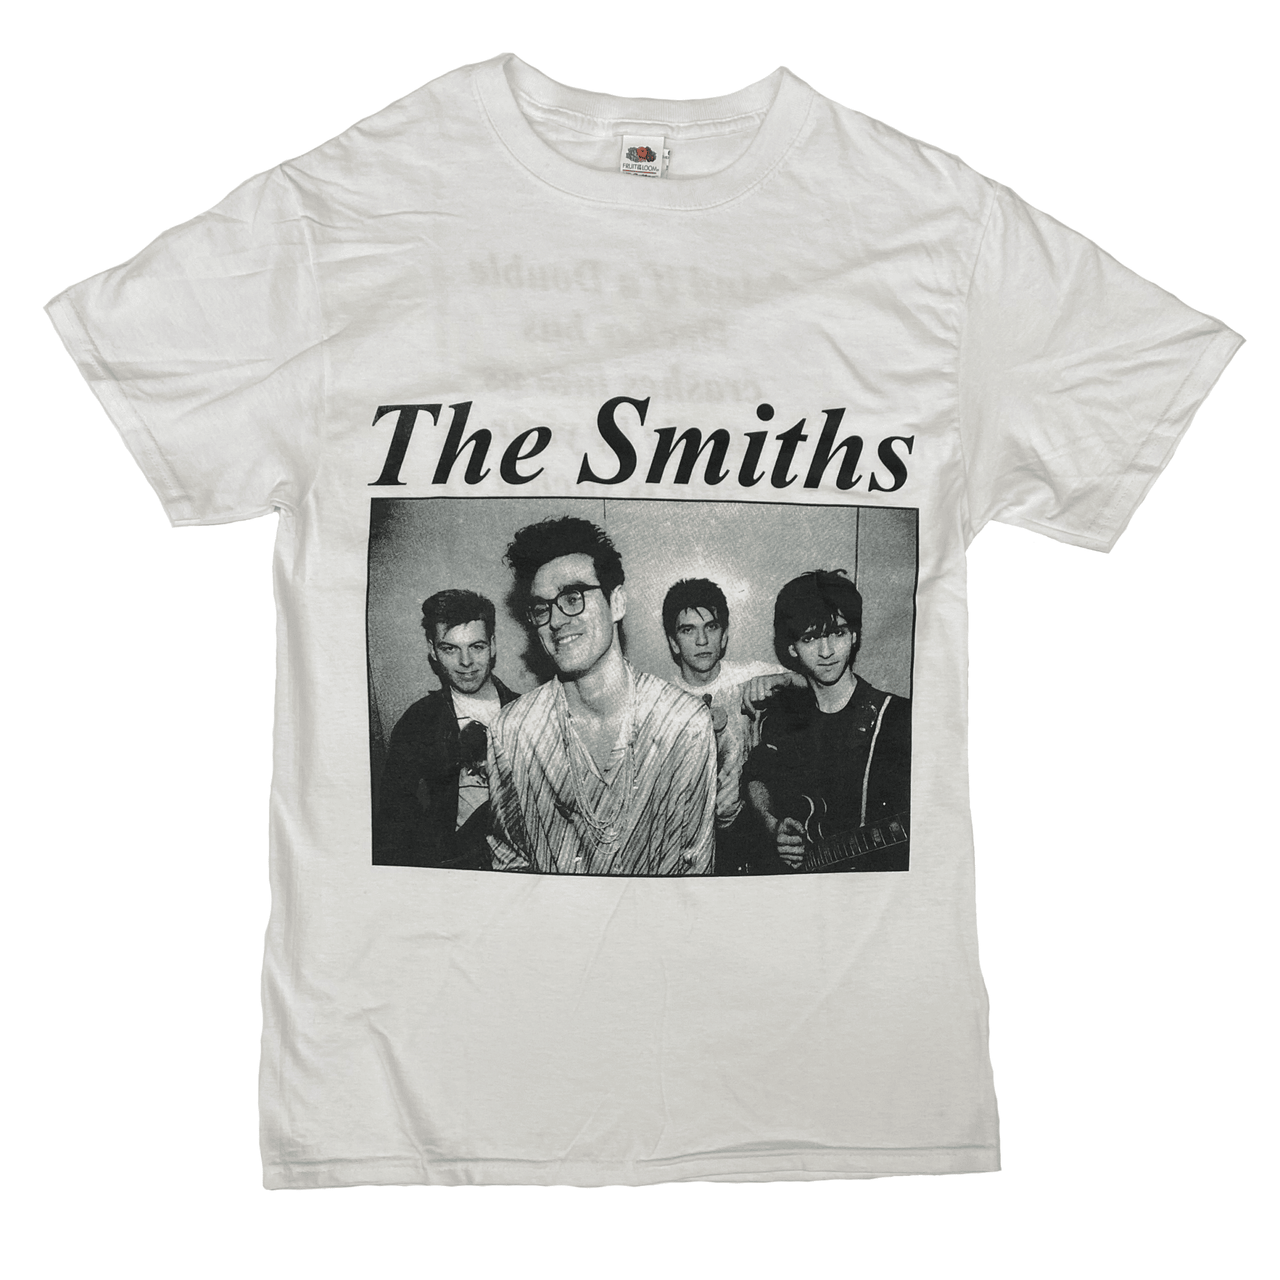 The Smiths Double Decker Bus T-Shirt